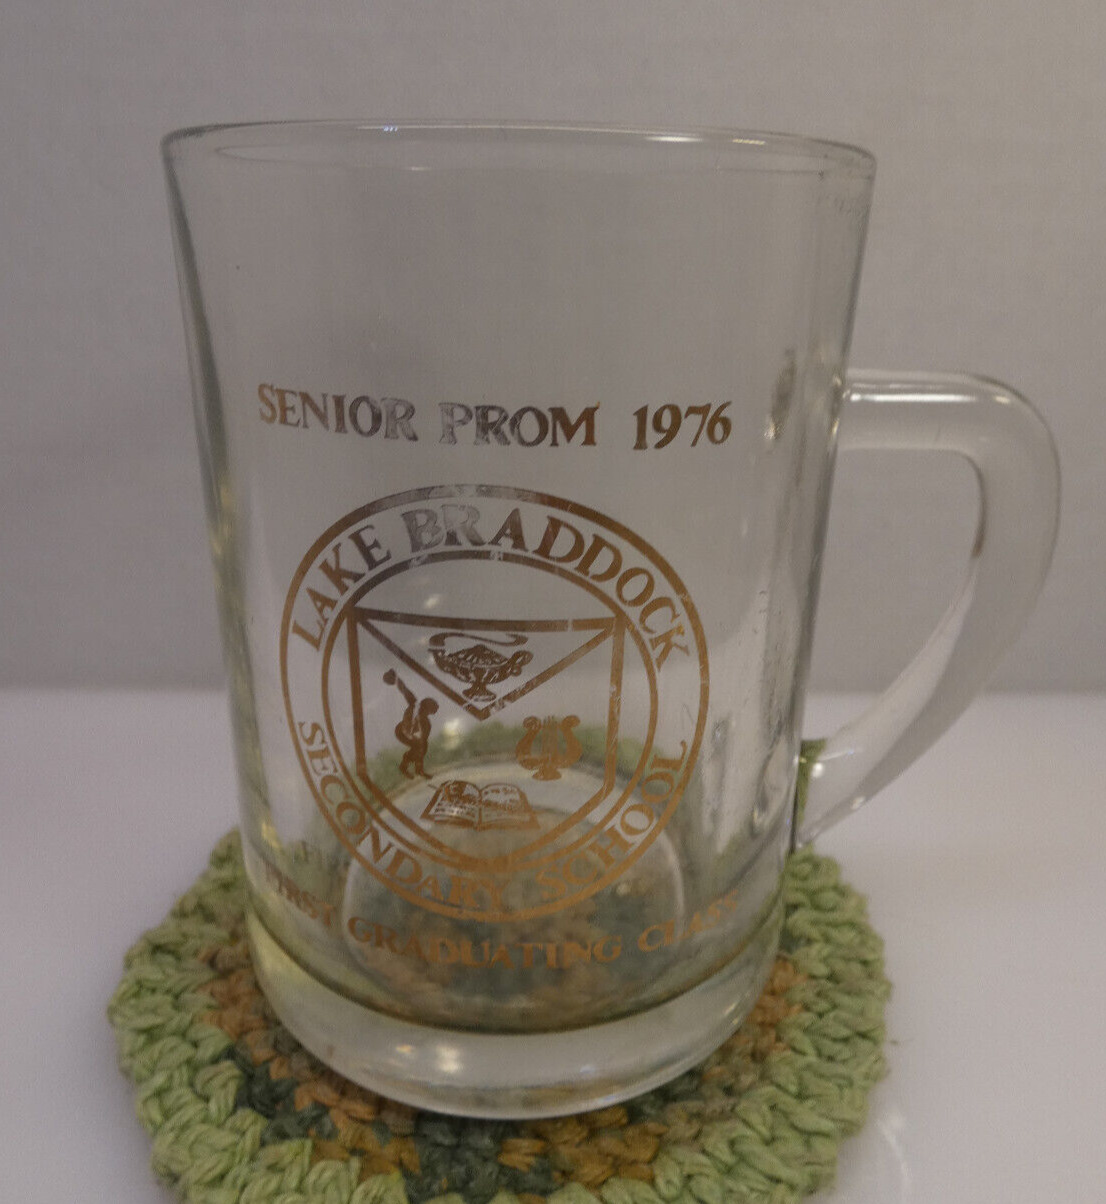 Lake Braddock Secondary School Senior Prom 1976 Commemorative Glass Mug